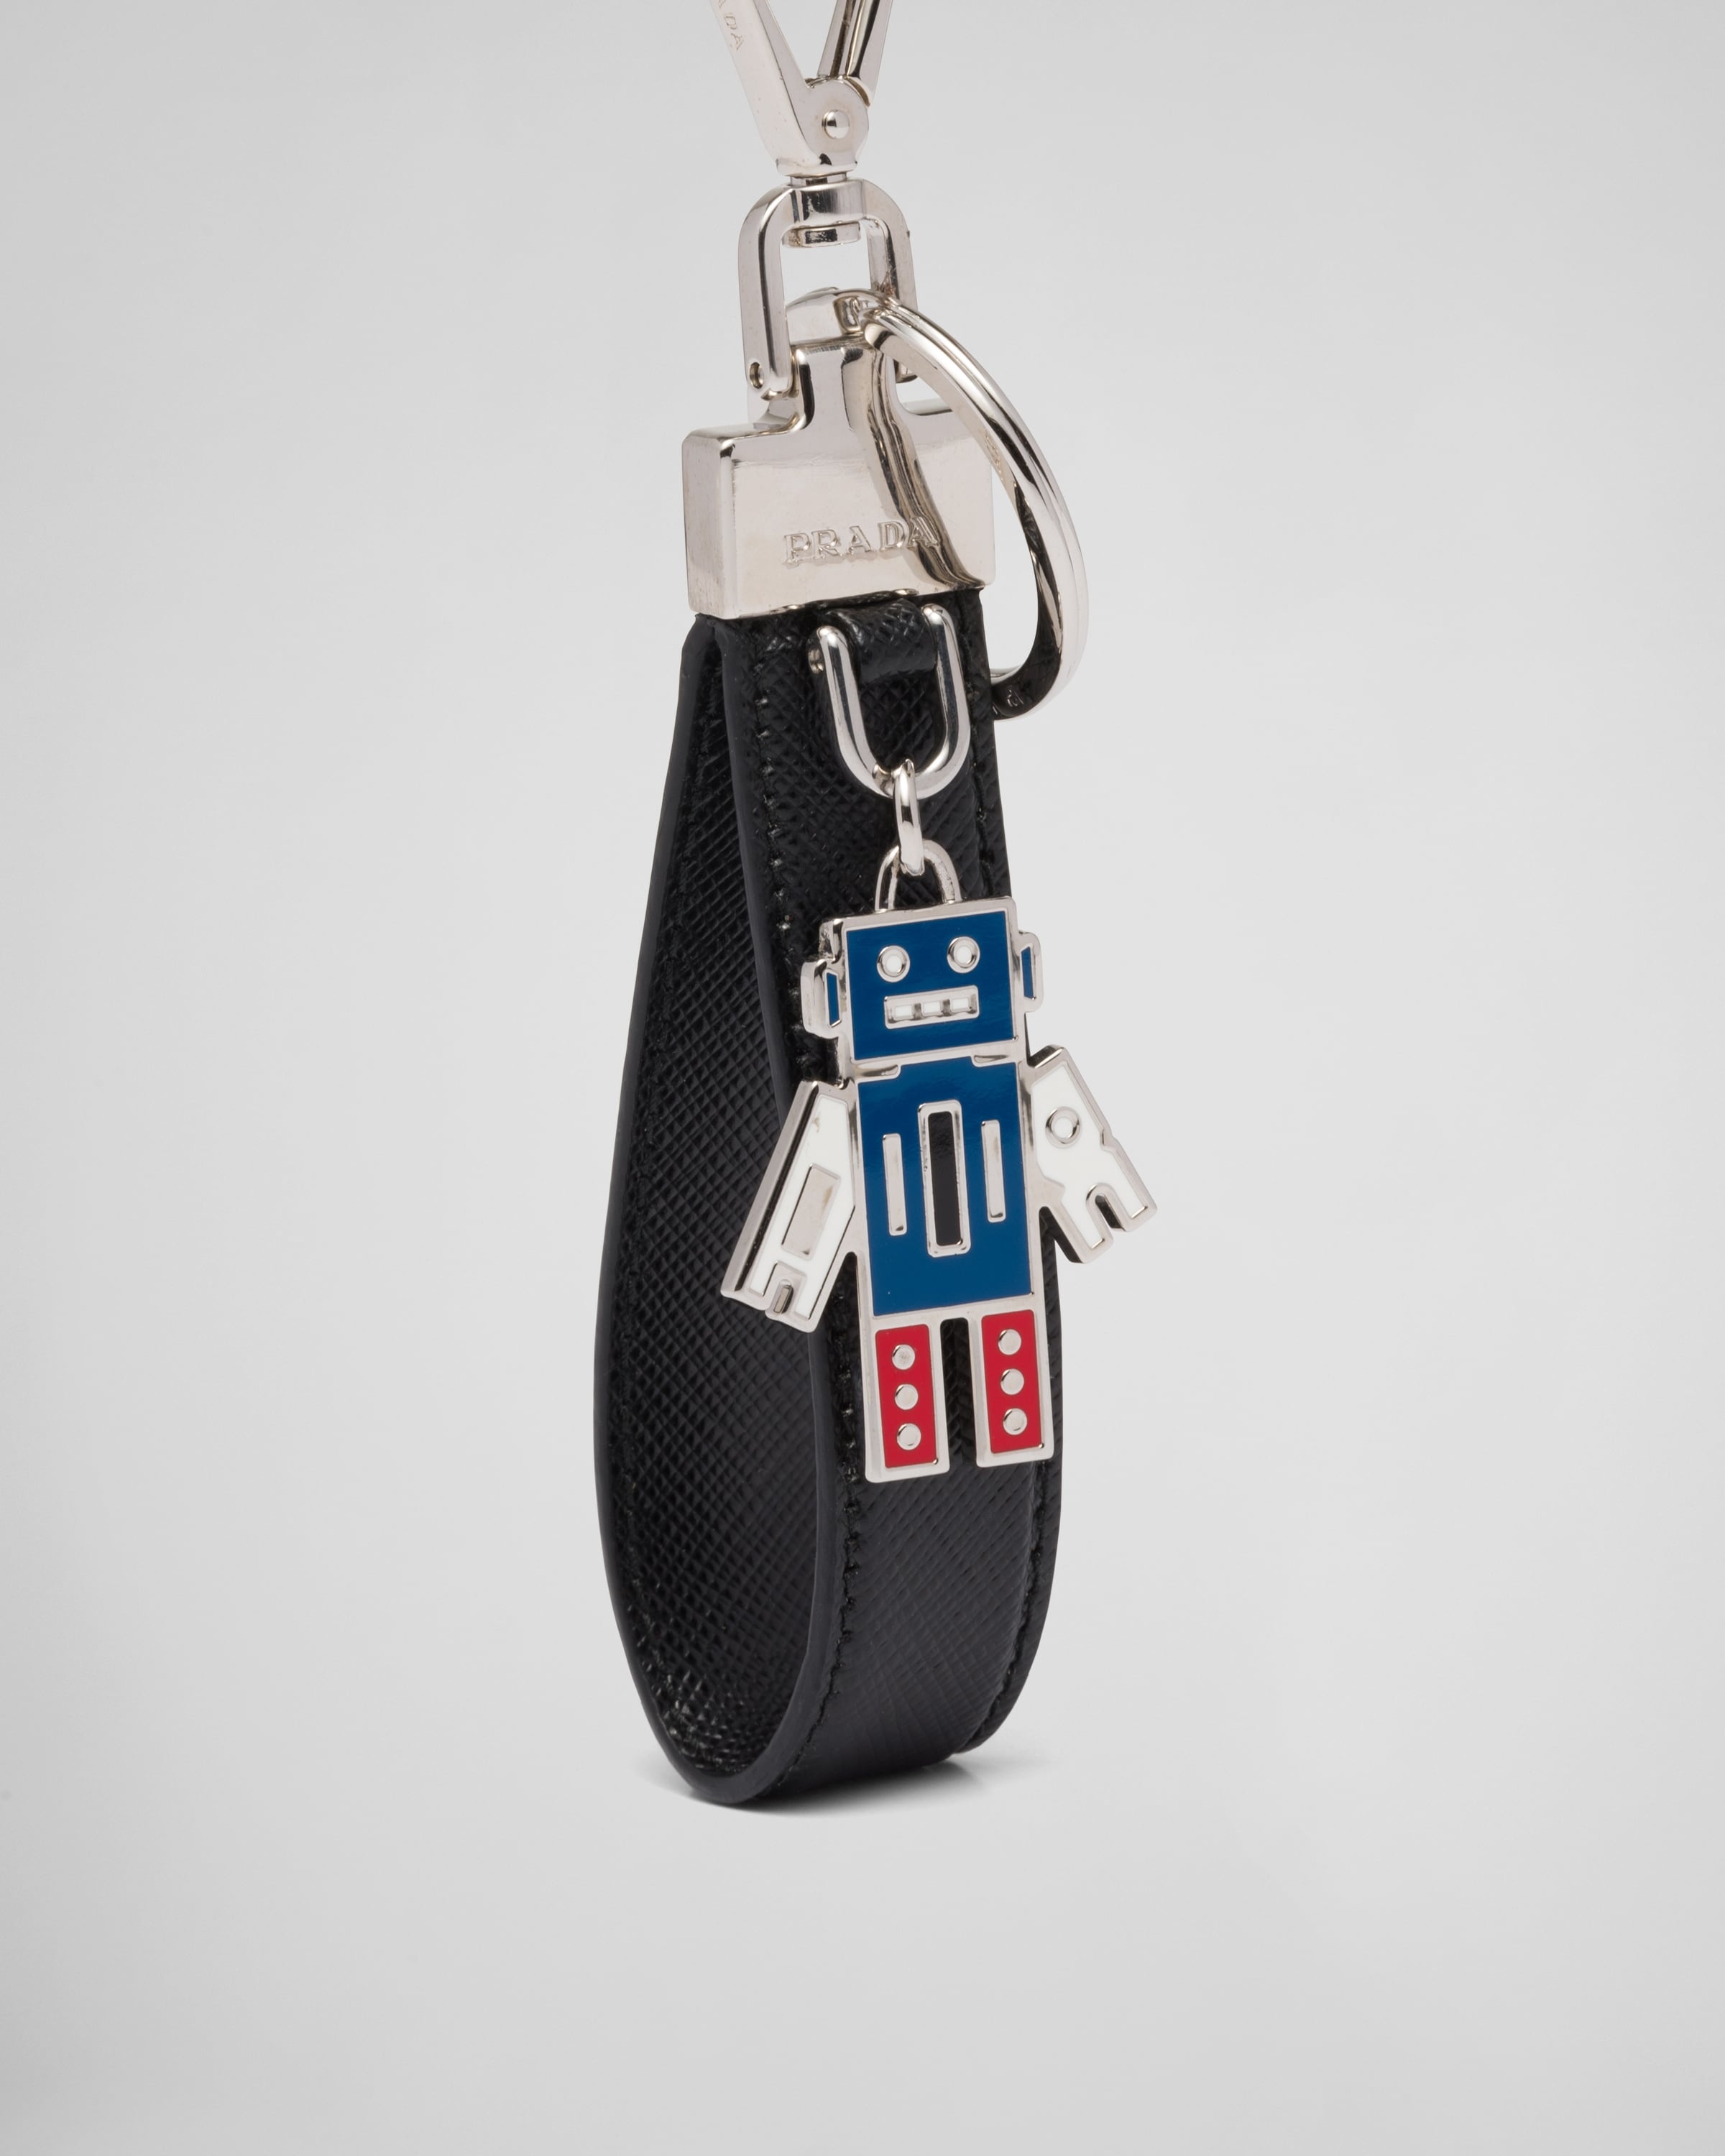 Saffiano Leather Keychain - 2